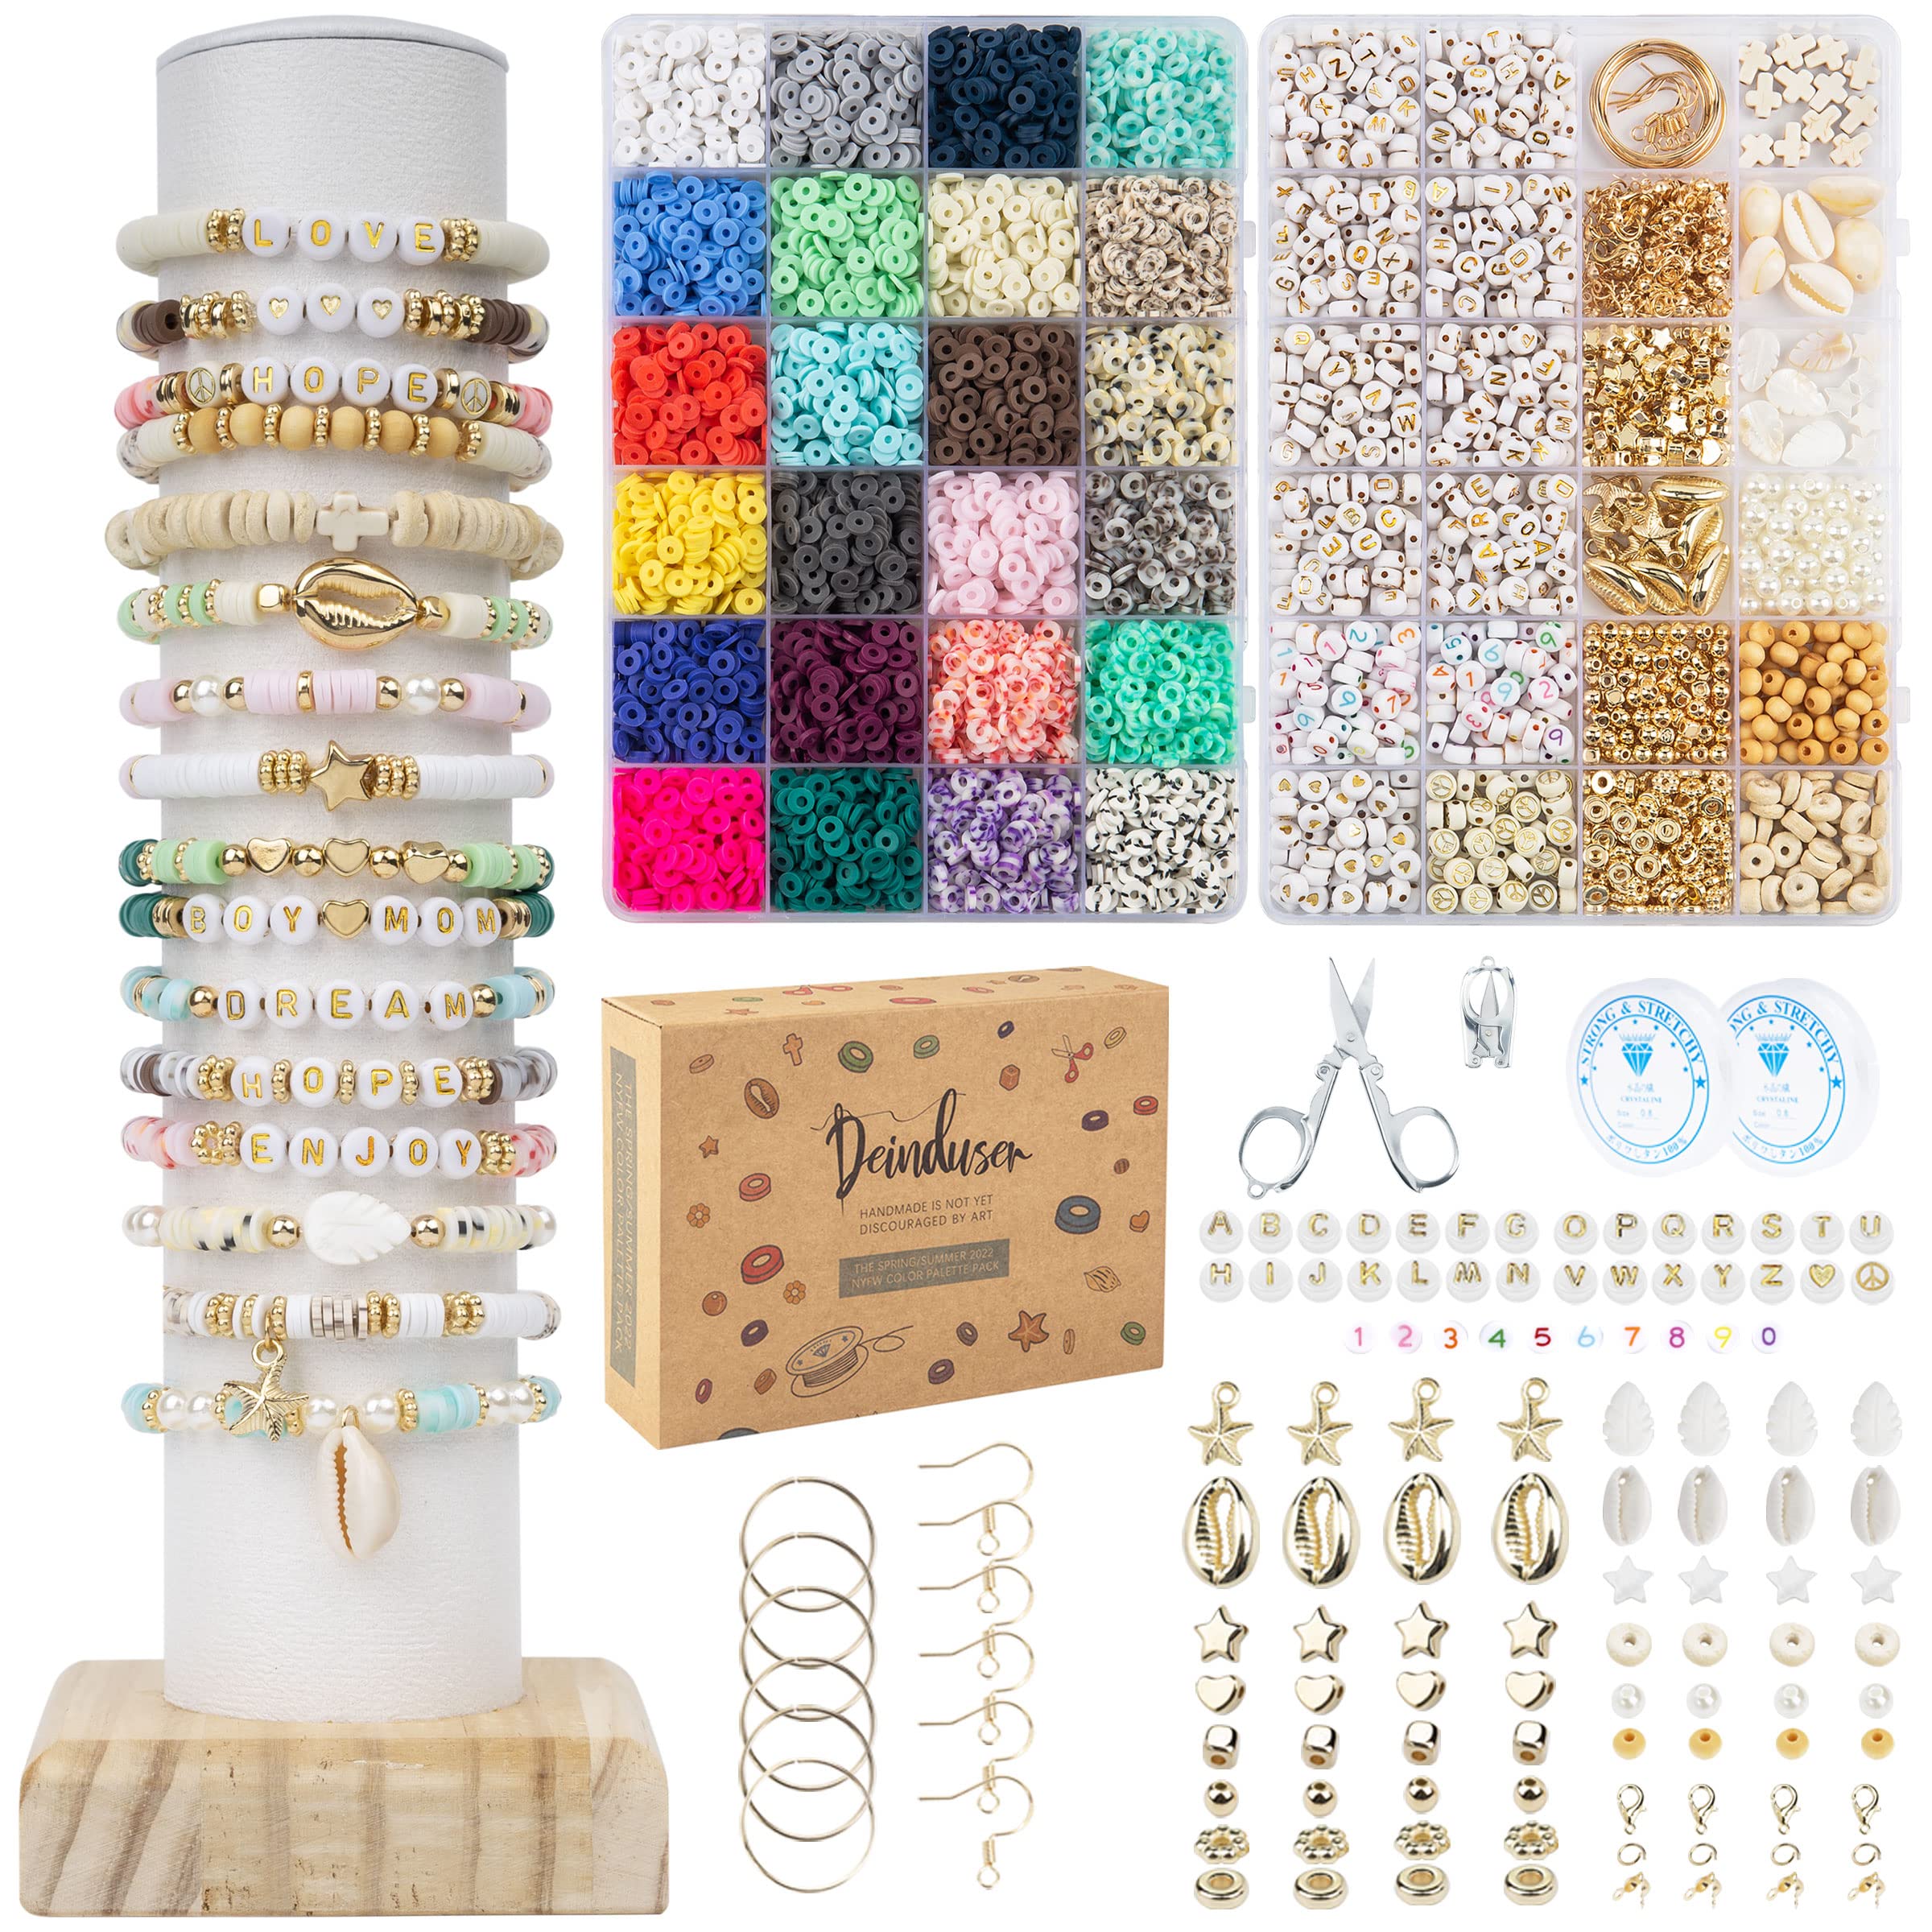 Clay bead bracelet kit